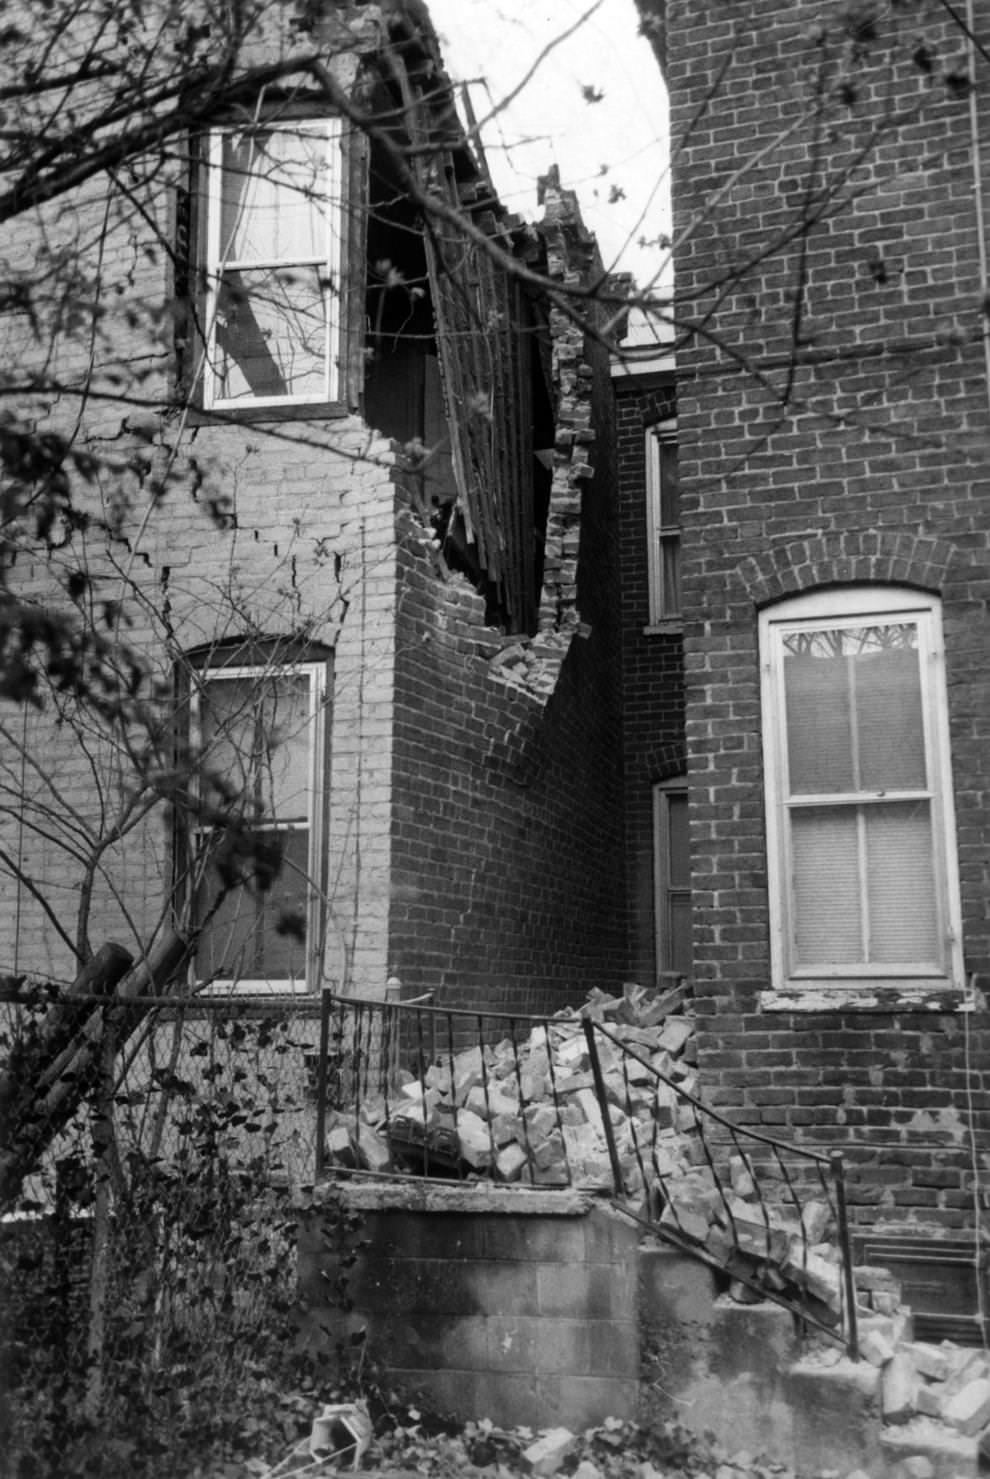 An explosion rocked a row of houses on Davis Avenue in Richmond’s Fan District, 1986